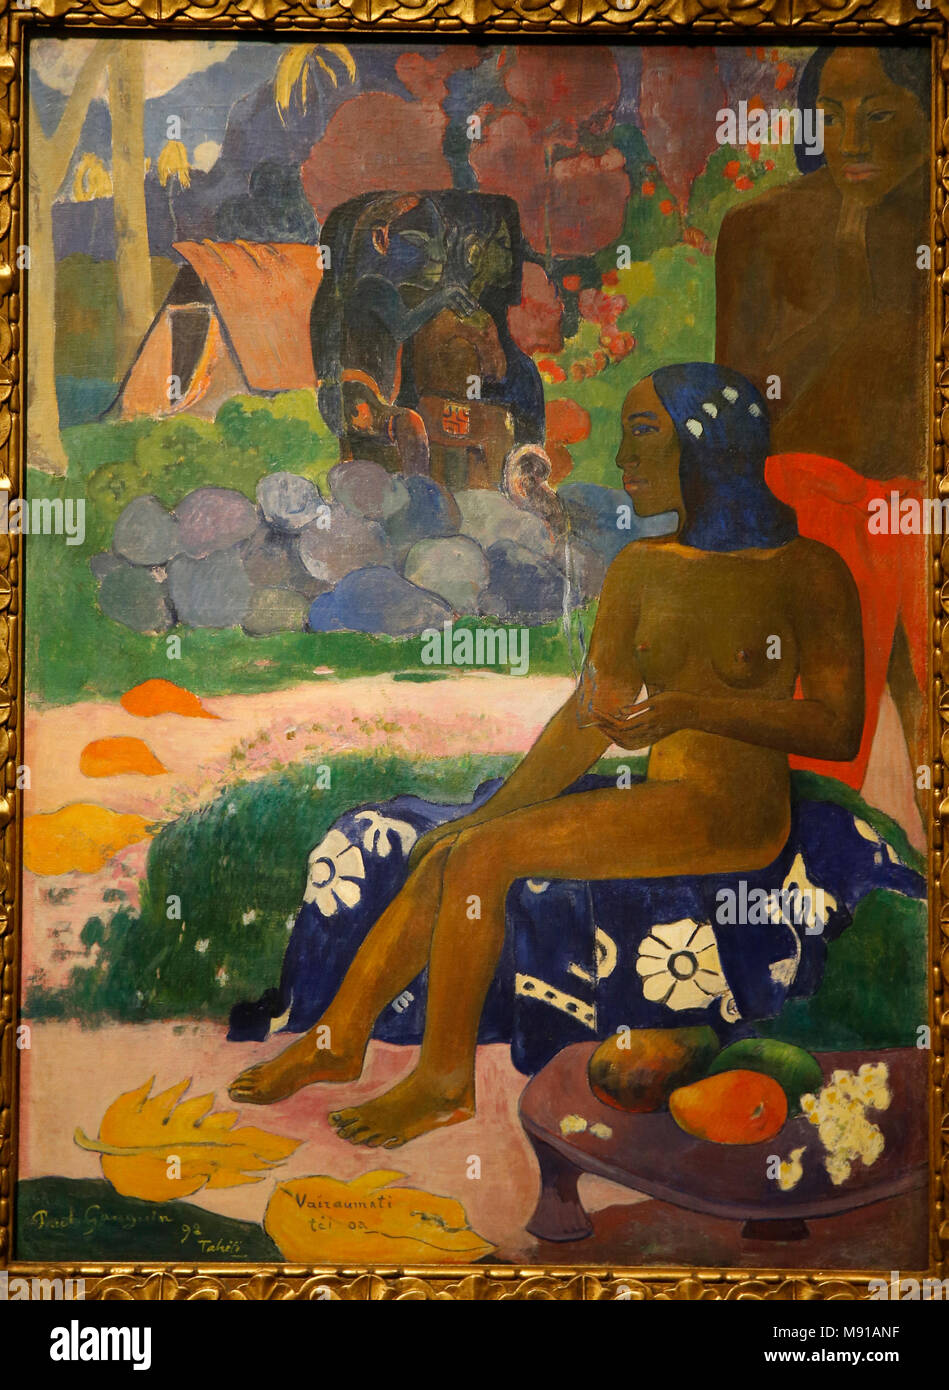 Paul Gauguin, Vairaumati tei oa (her name was Vairaumati),1892, oil on canvas. Shchukin Collection, Pushkin Fine Art Museum, Moskow. Shot while exhibi Stock Photo